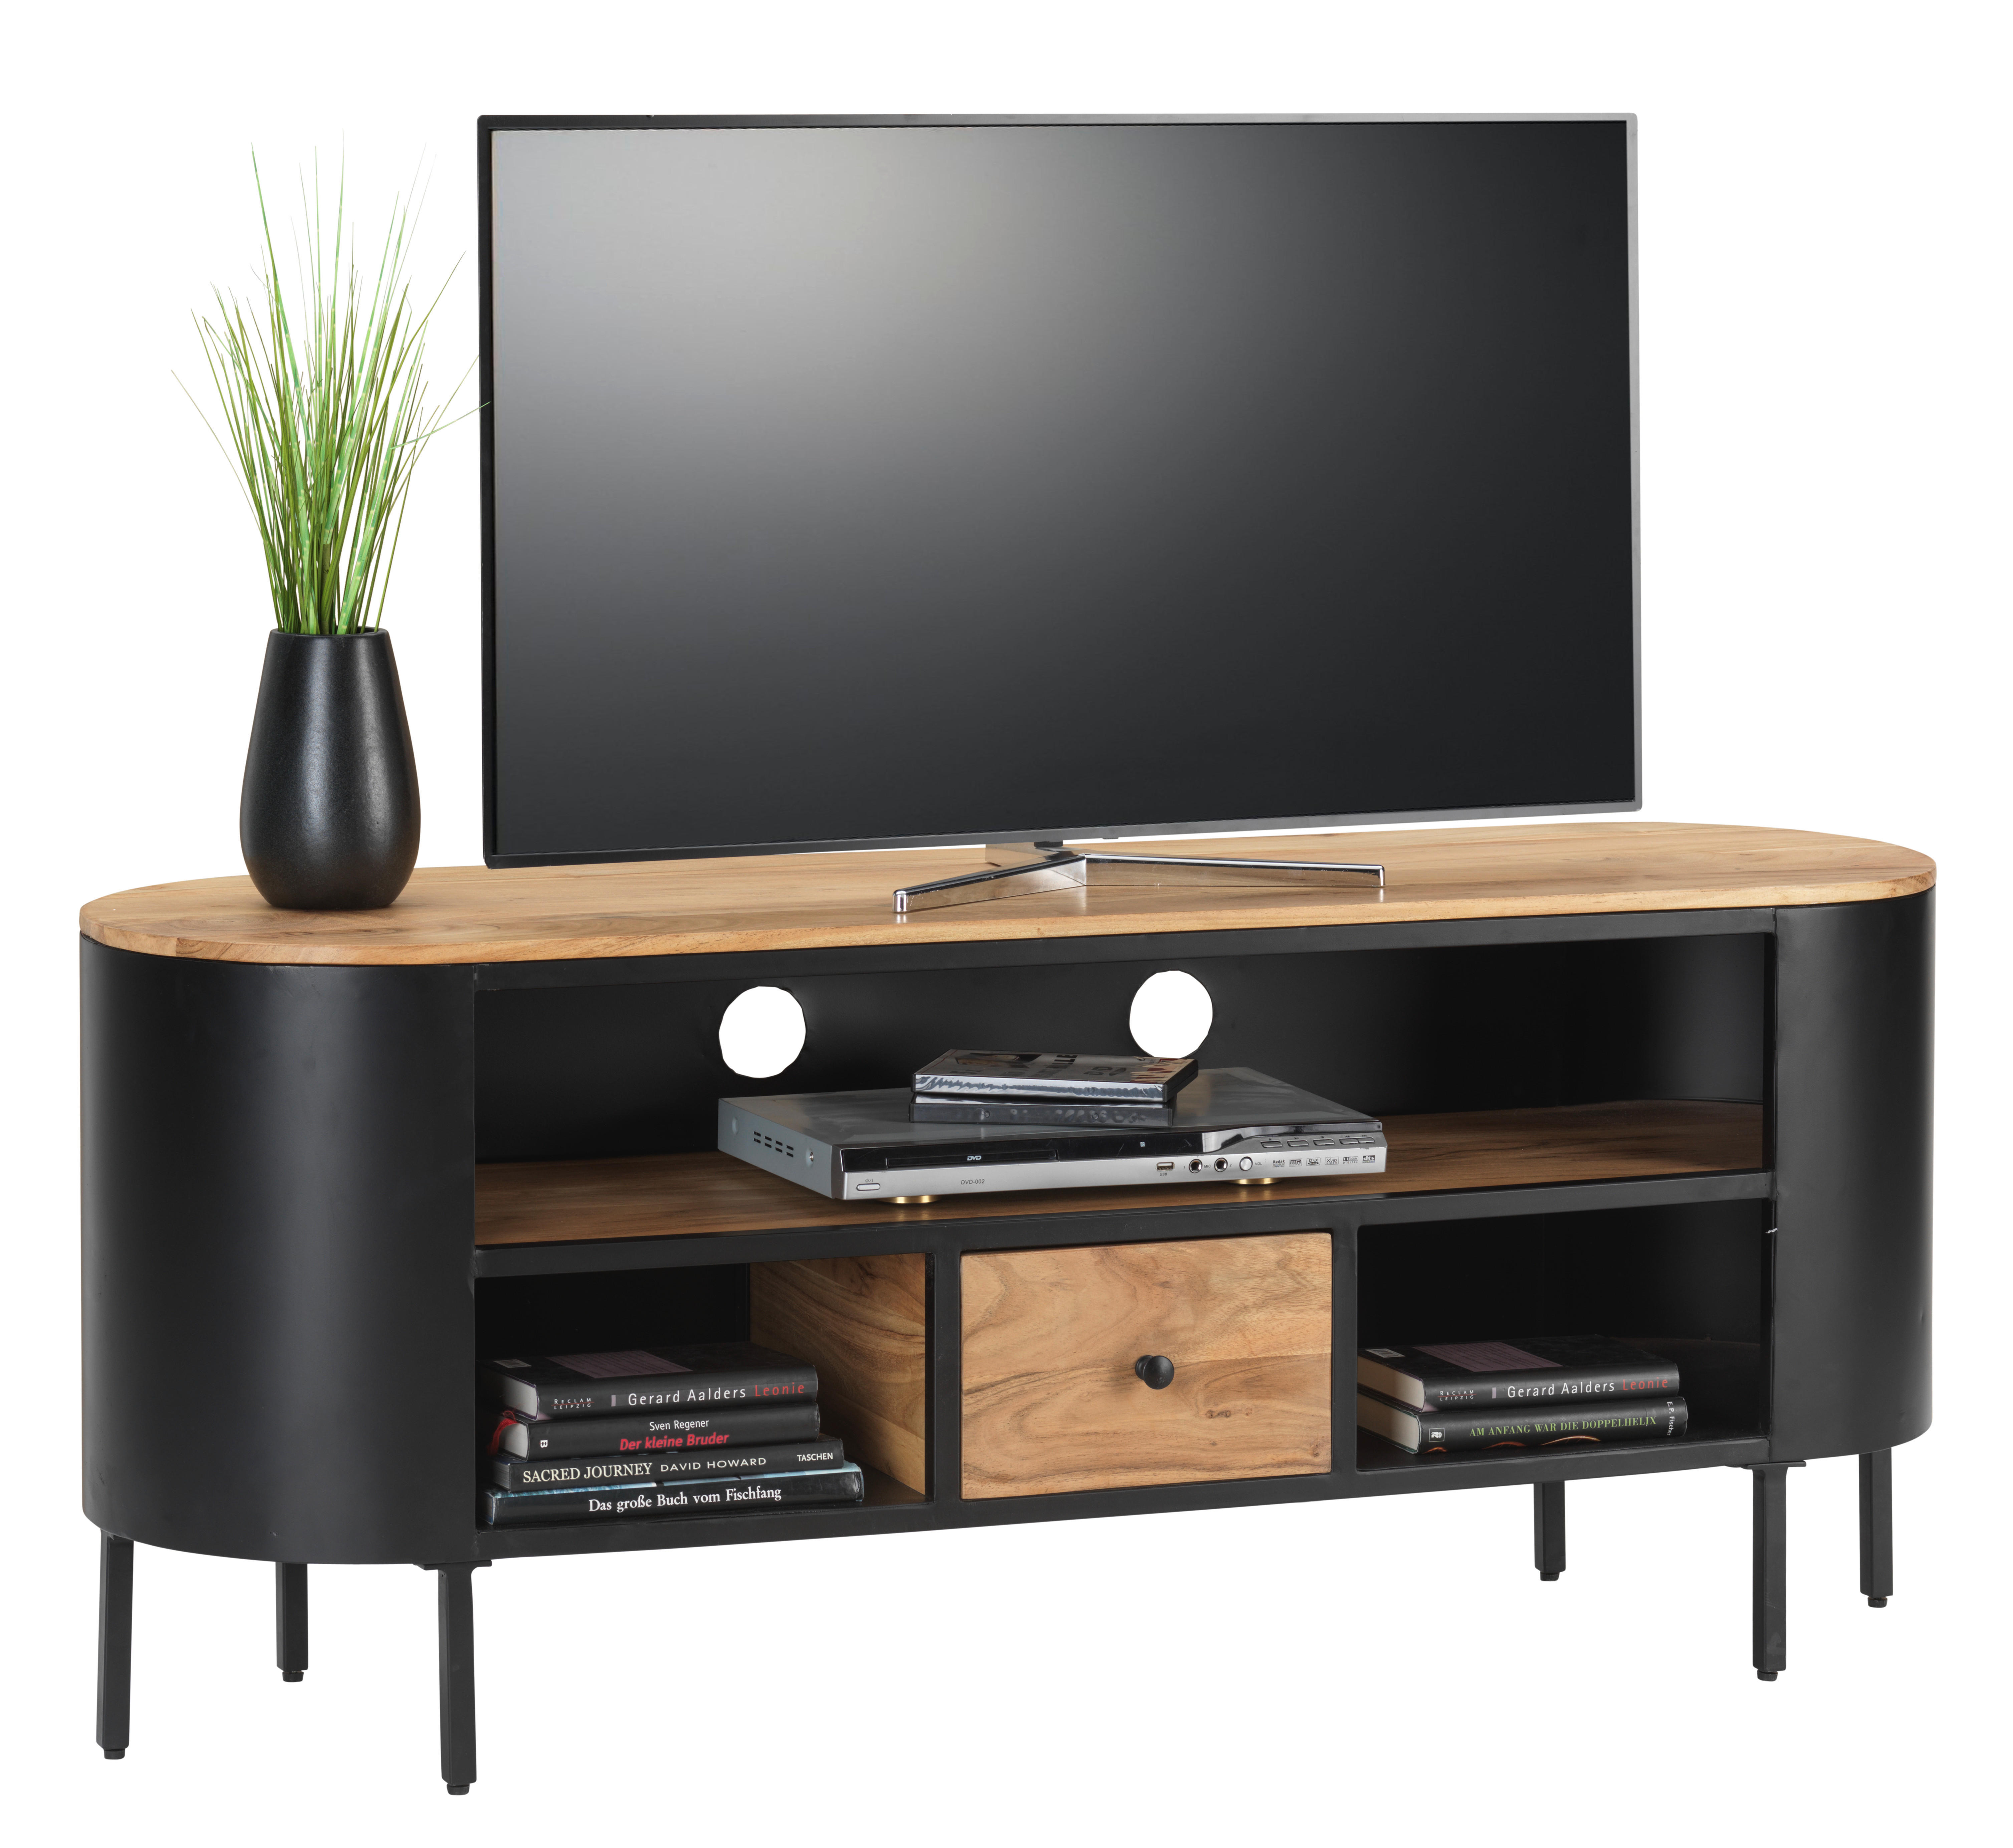 TV-ELEM 145/60/40 cm  - akácia színű/fekete, Trend, fém/fa (145/60/40cm) - Ambia Home